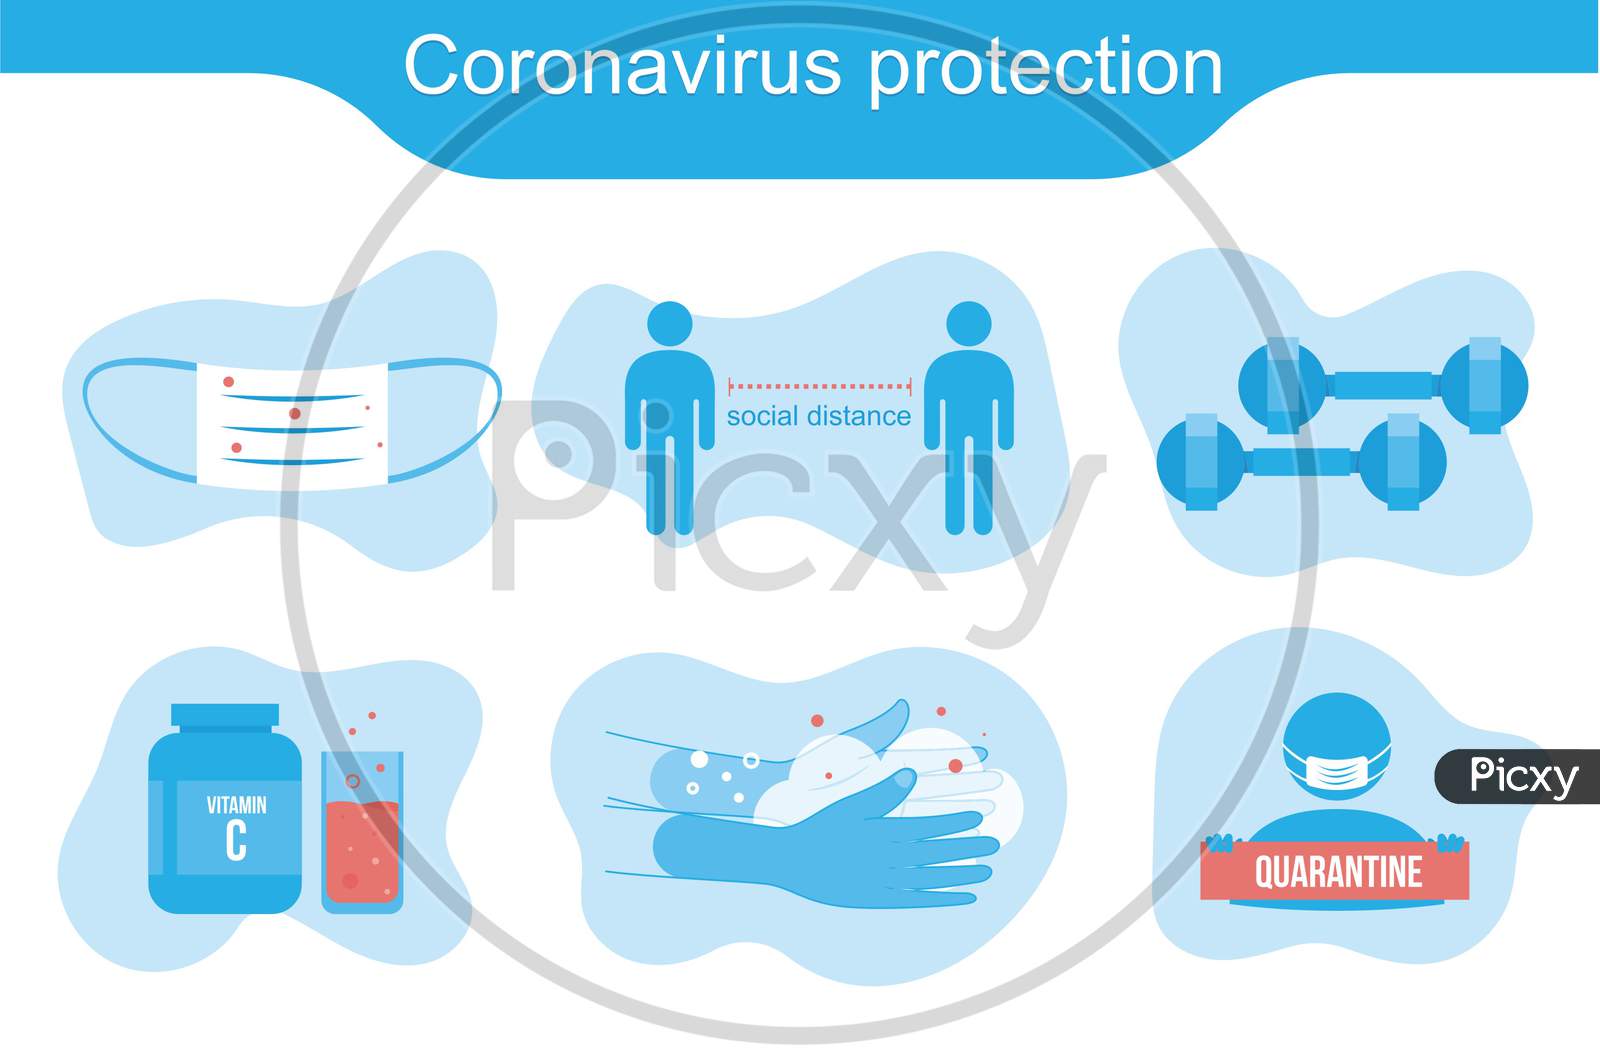 Coronavirus protection guidelines